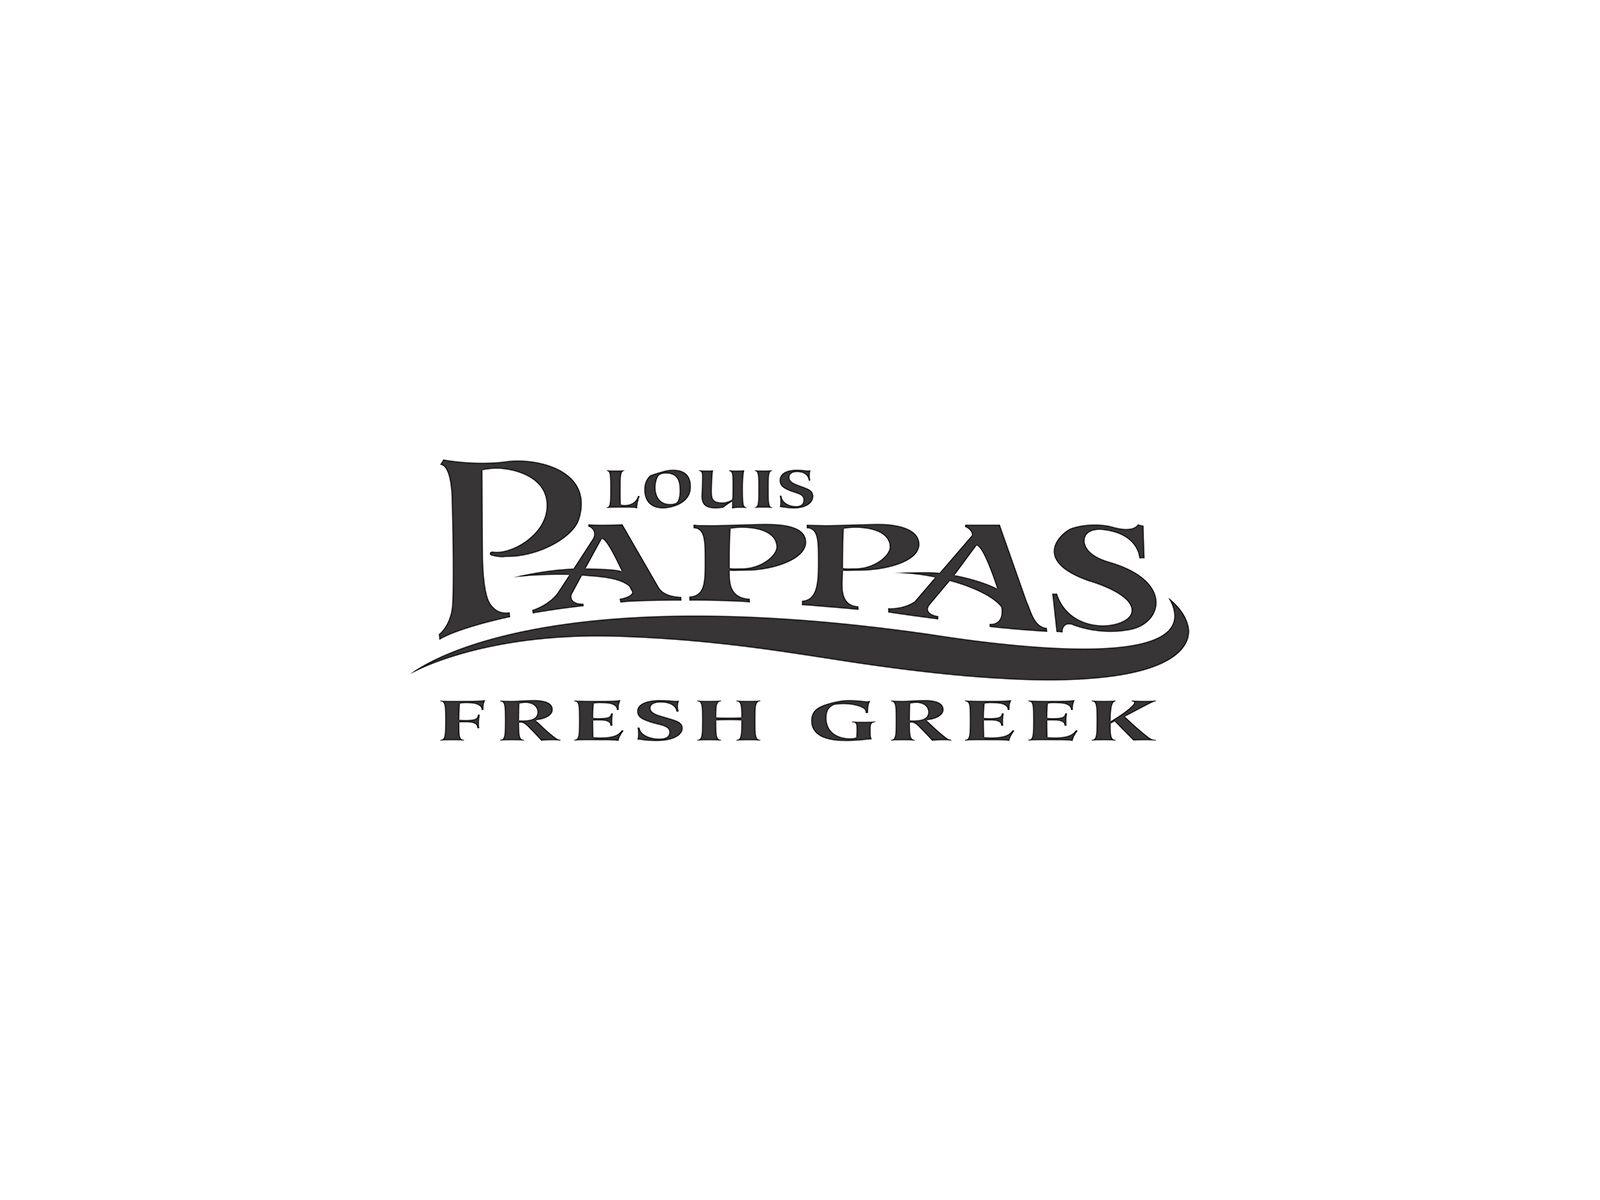 Pappas Logo - Louis Pappas. Tampa International Airport